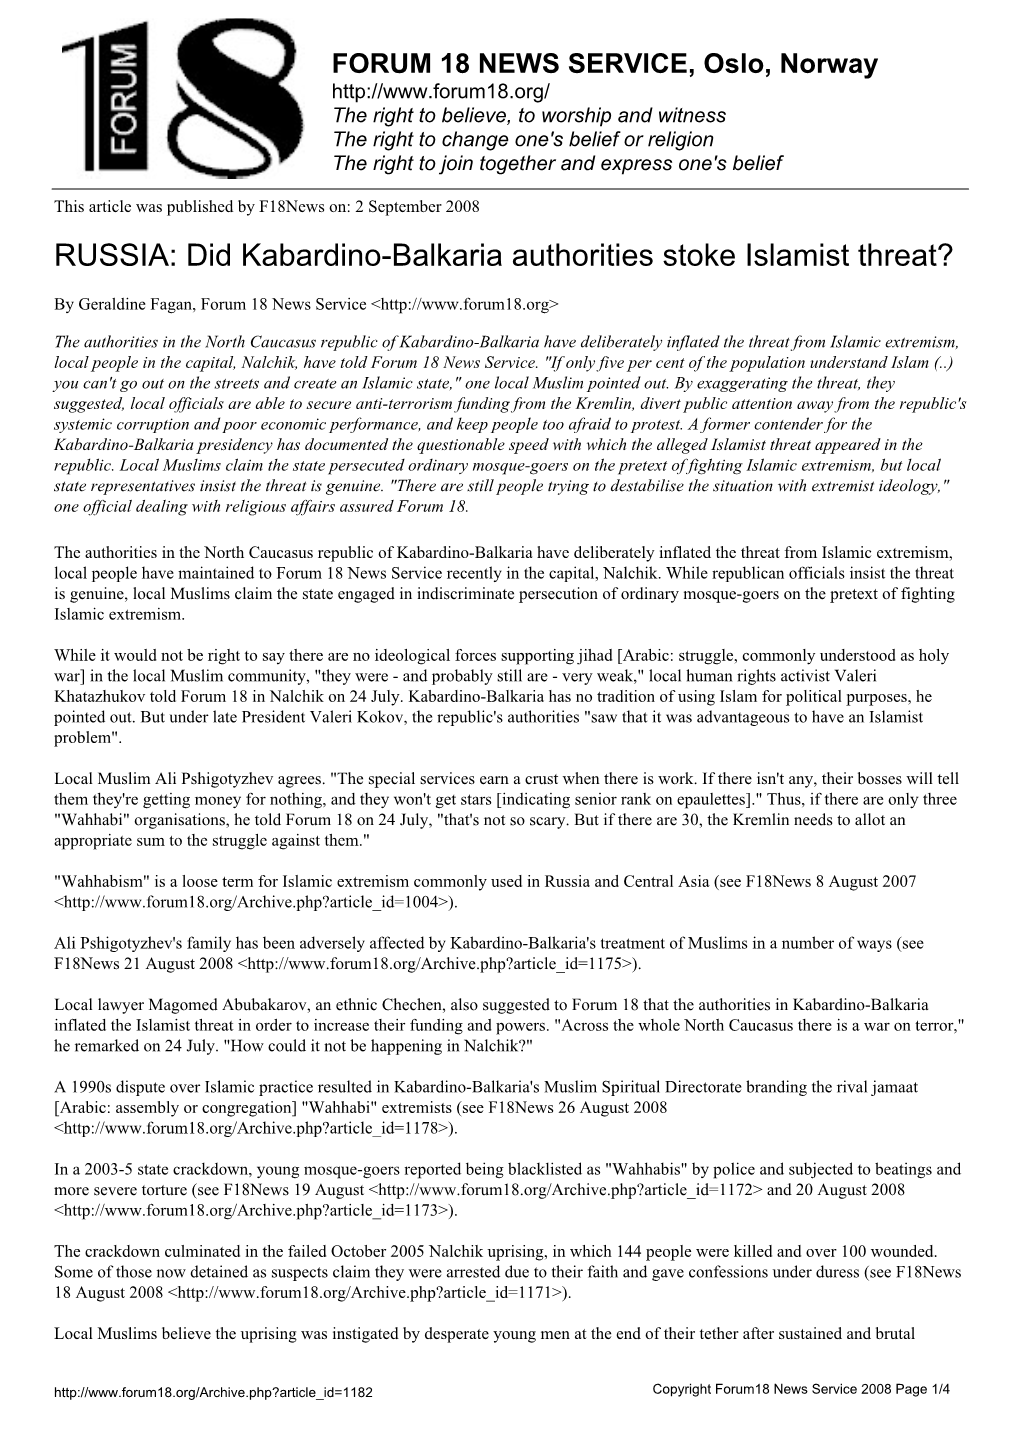 RUSSIA: Did Kabardino-Balkaria Authorities Stoke Islamist Threat?